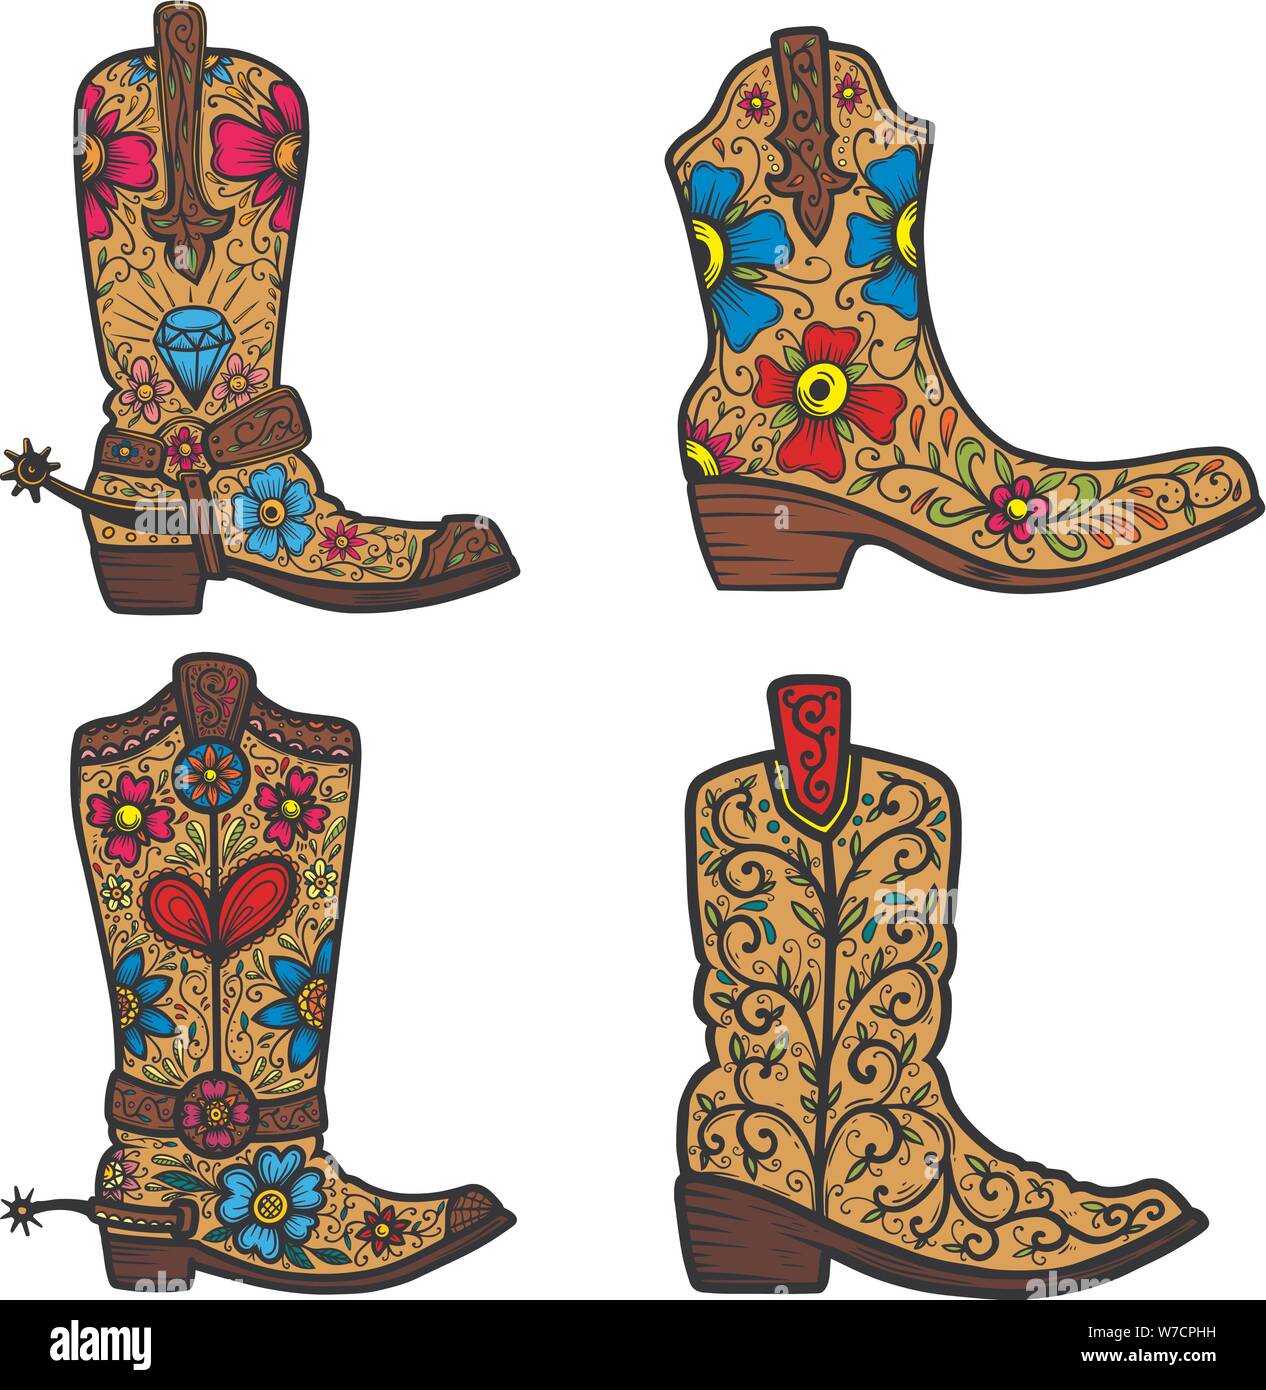 Der Cowboy-stiefel mit floralen Muster. Design Element für Poster, t-shirt, Emblem, sign. Stock Vektor